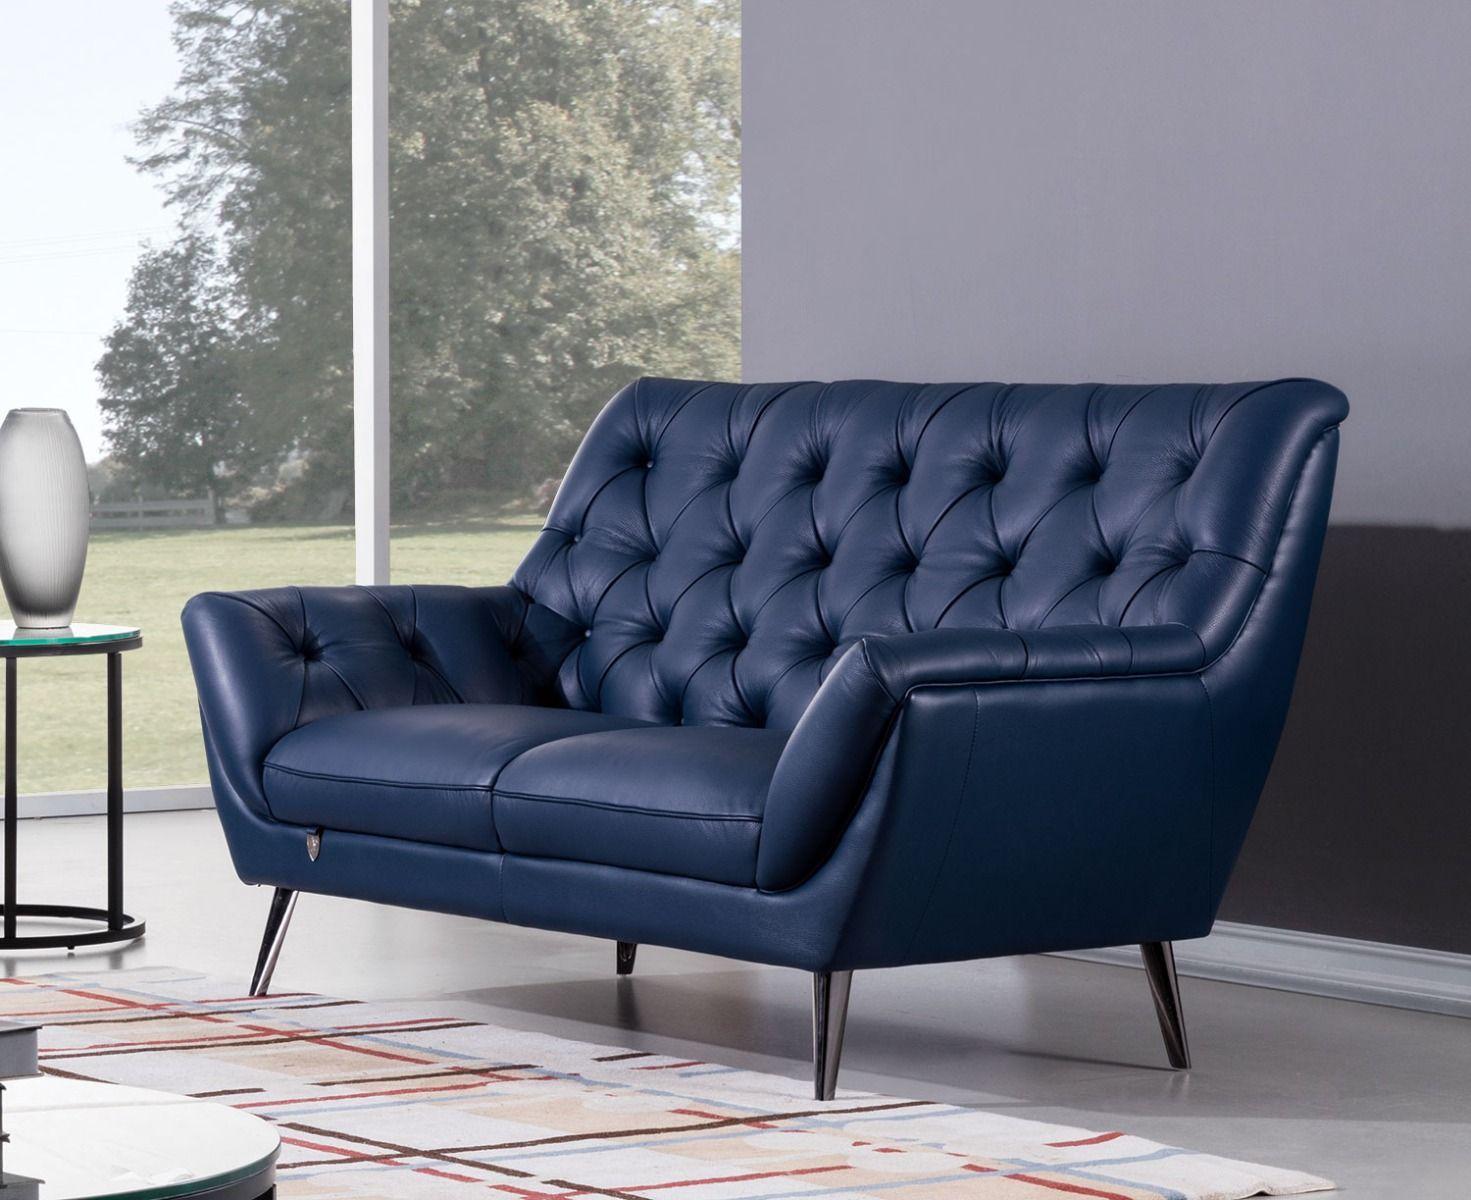 

                    
American Eagle Furniture EK8003-NB Sofa Set Navy blue Top grain leather Purchase 
